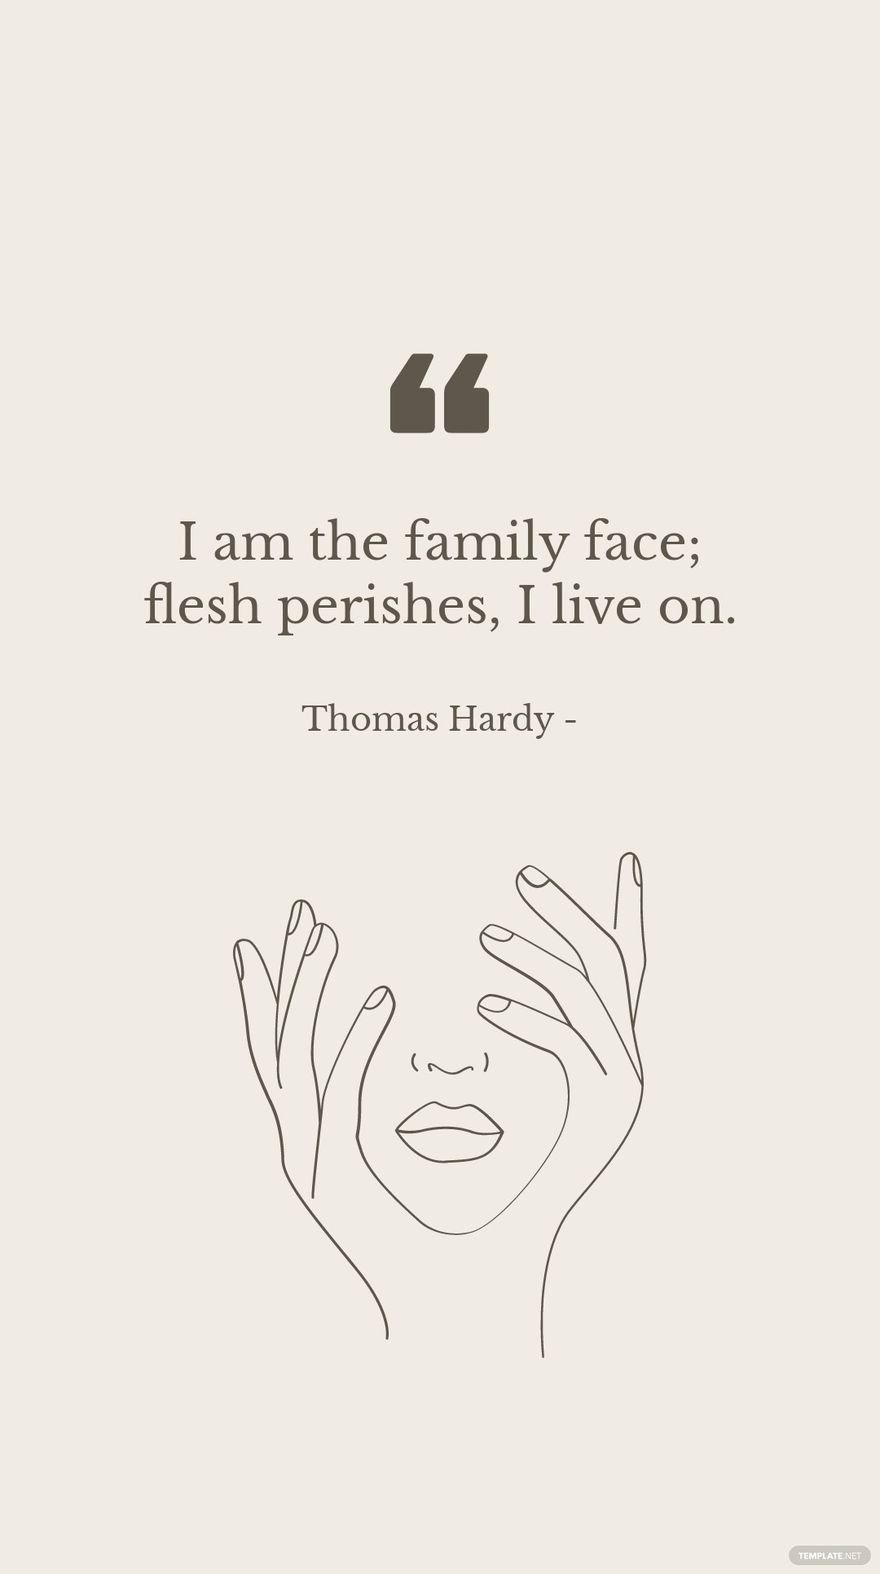 Free Thomas Hardy - I am the family face; flesh perishes, I live on. in JPG